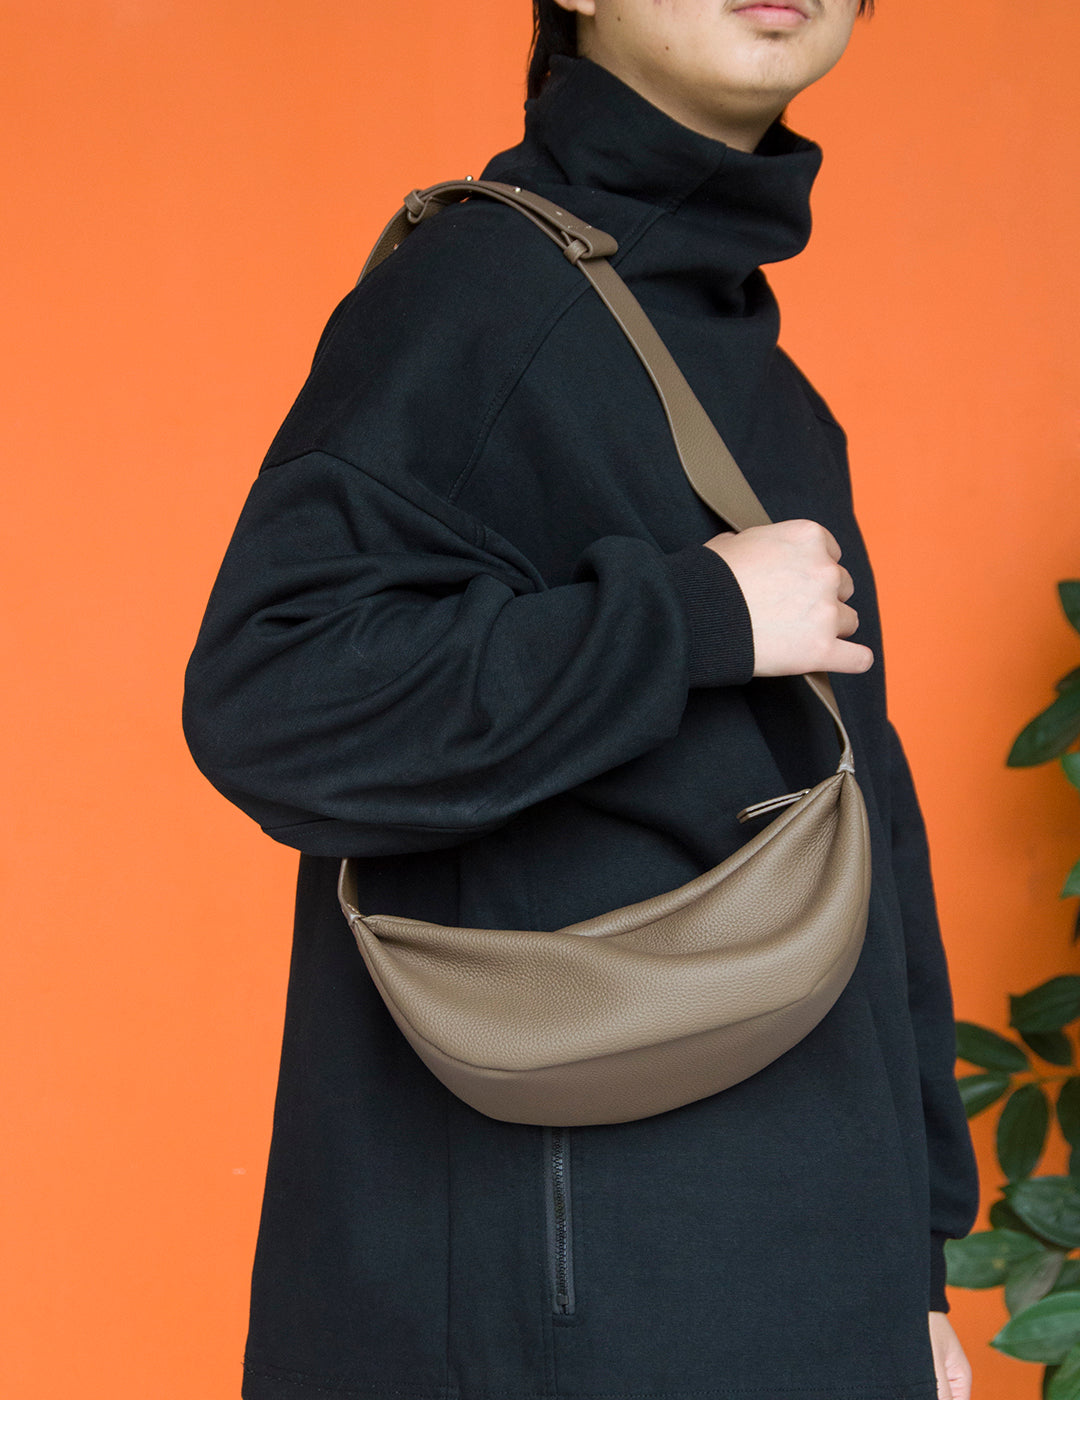 Full Grain Leather Minimalist Sling Bag